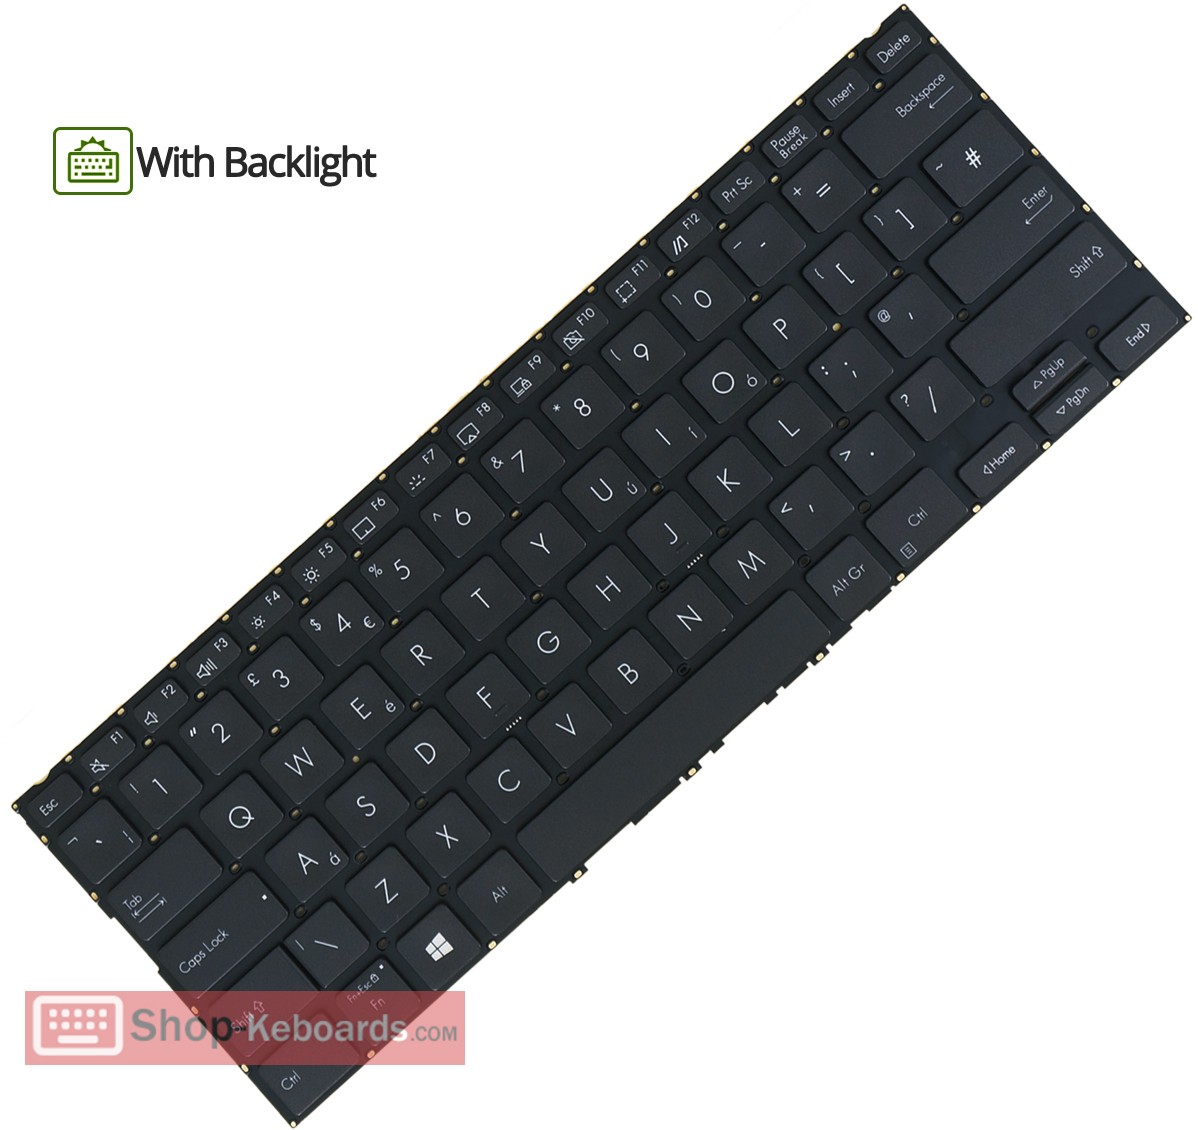 Asus 0KNB0-262VUK00 Keyboard replacement